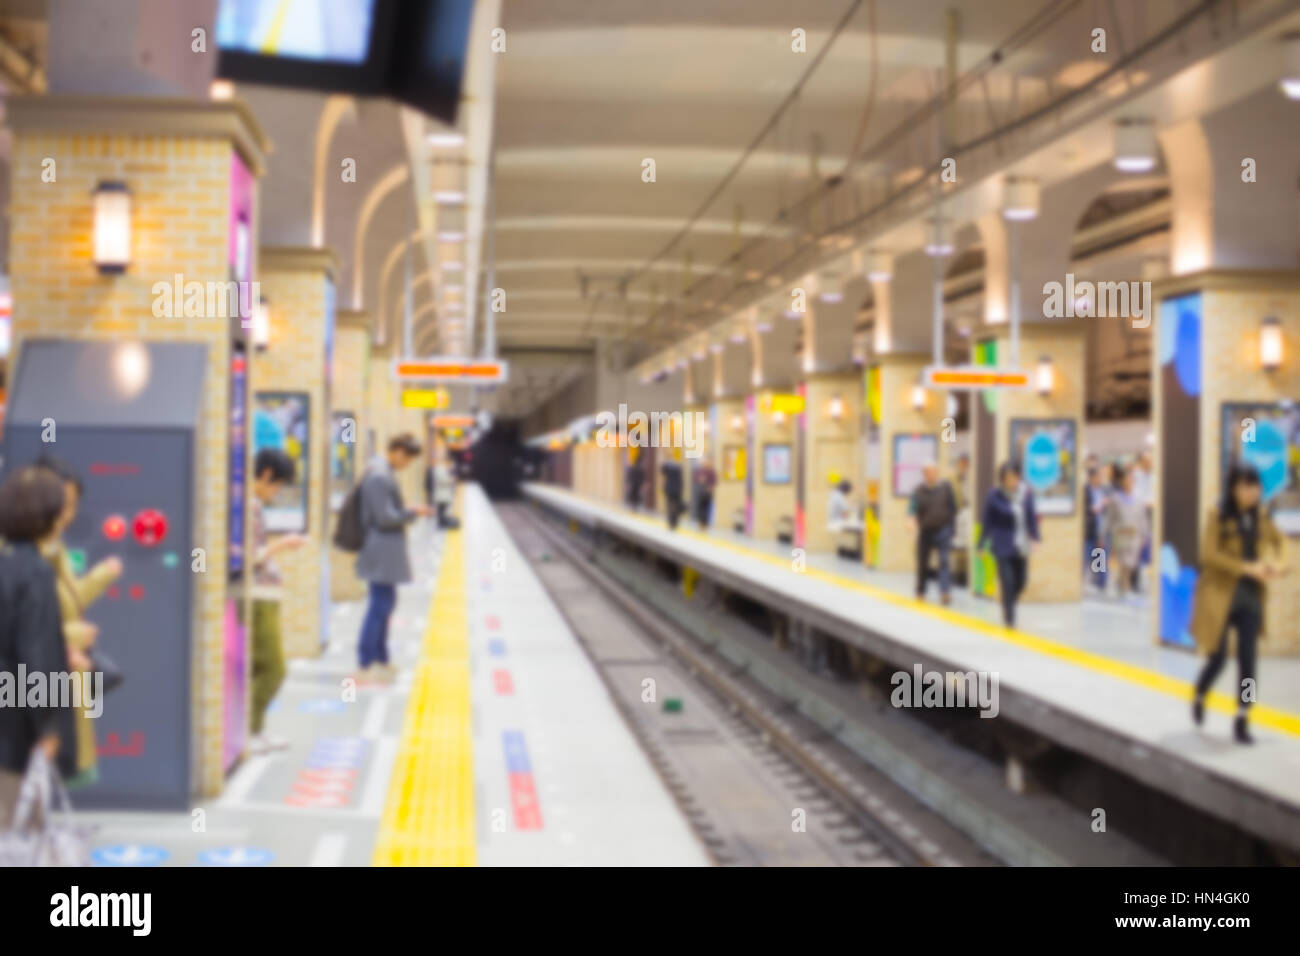 blur japan underground train station for background. Stock Photo